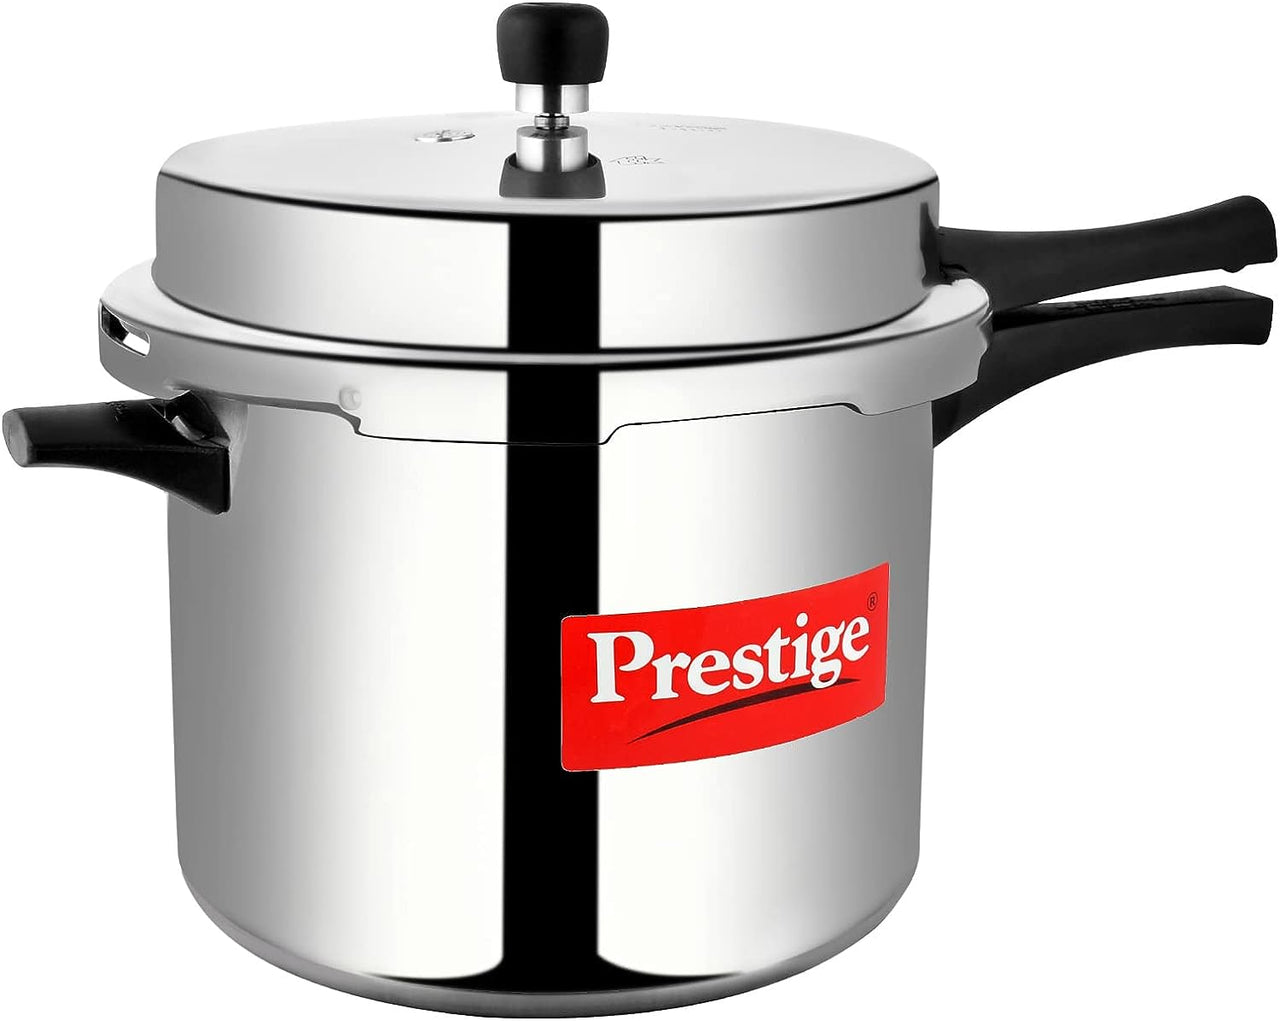 Prestige 6.5 Liters Aluminum Pressure Cooker